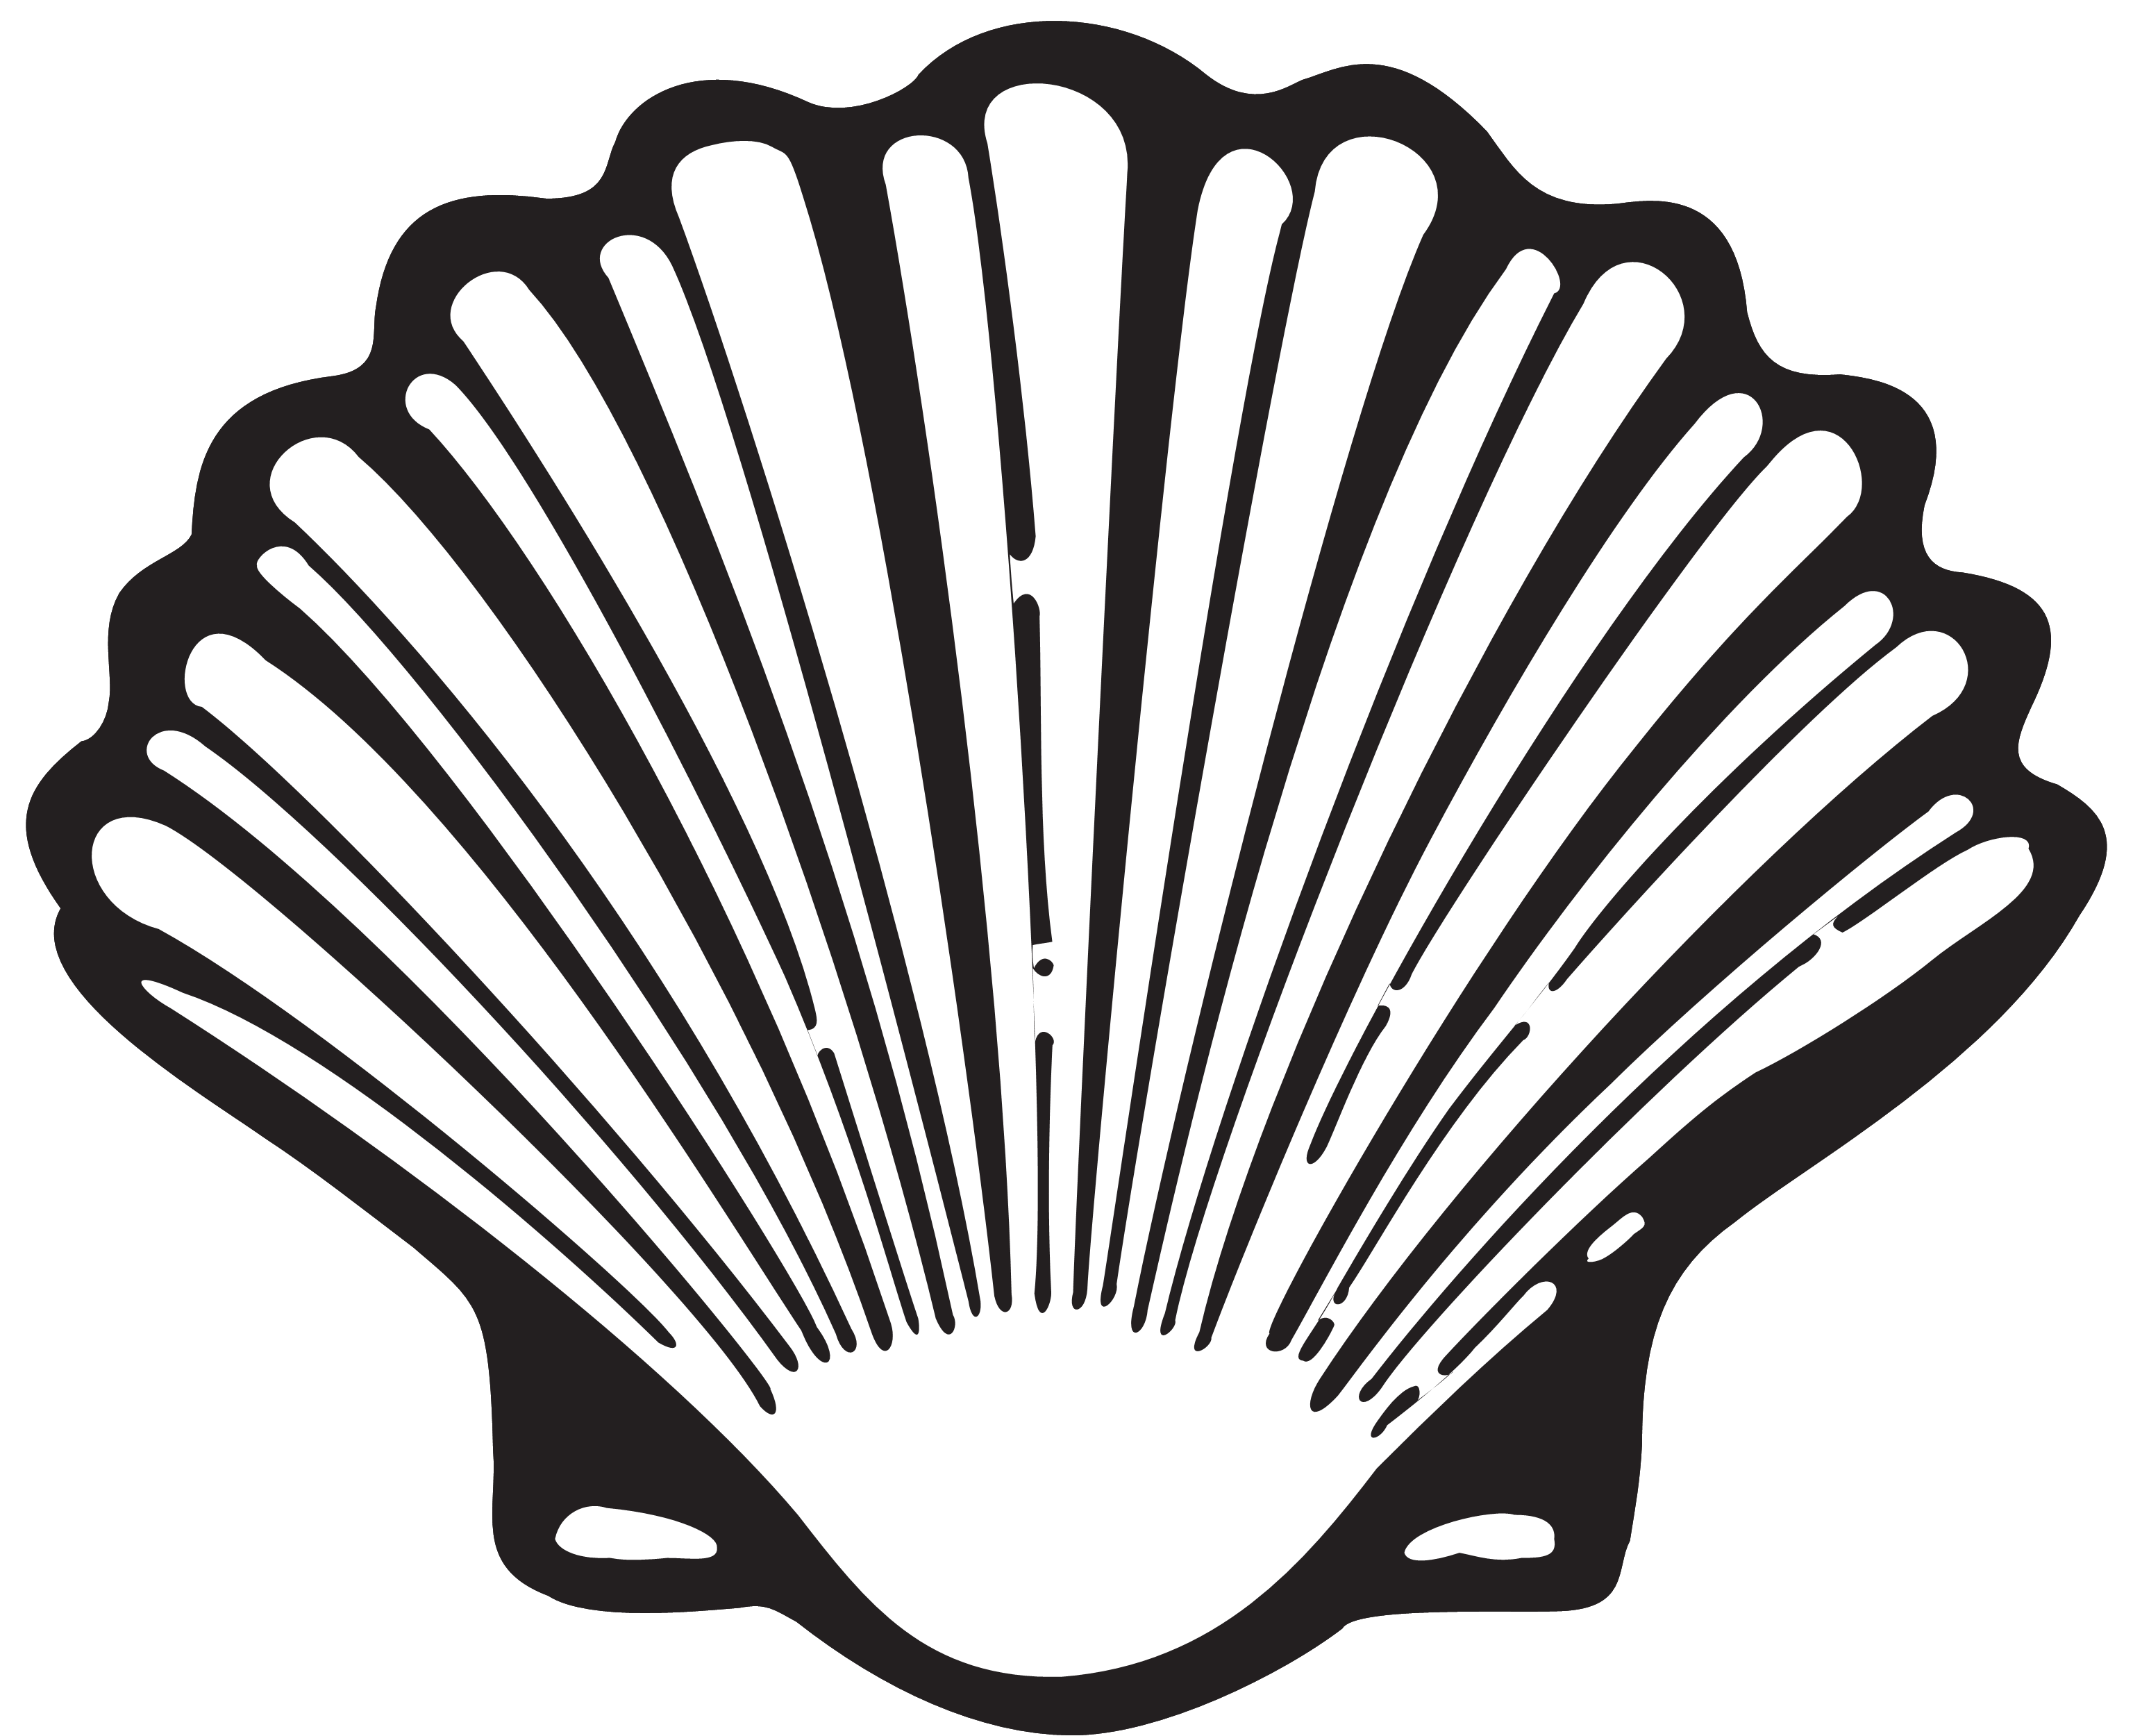 Shell | Logopedia | FANDOM powered by Wikia